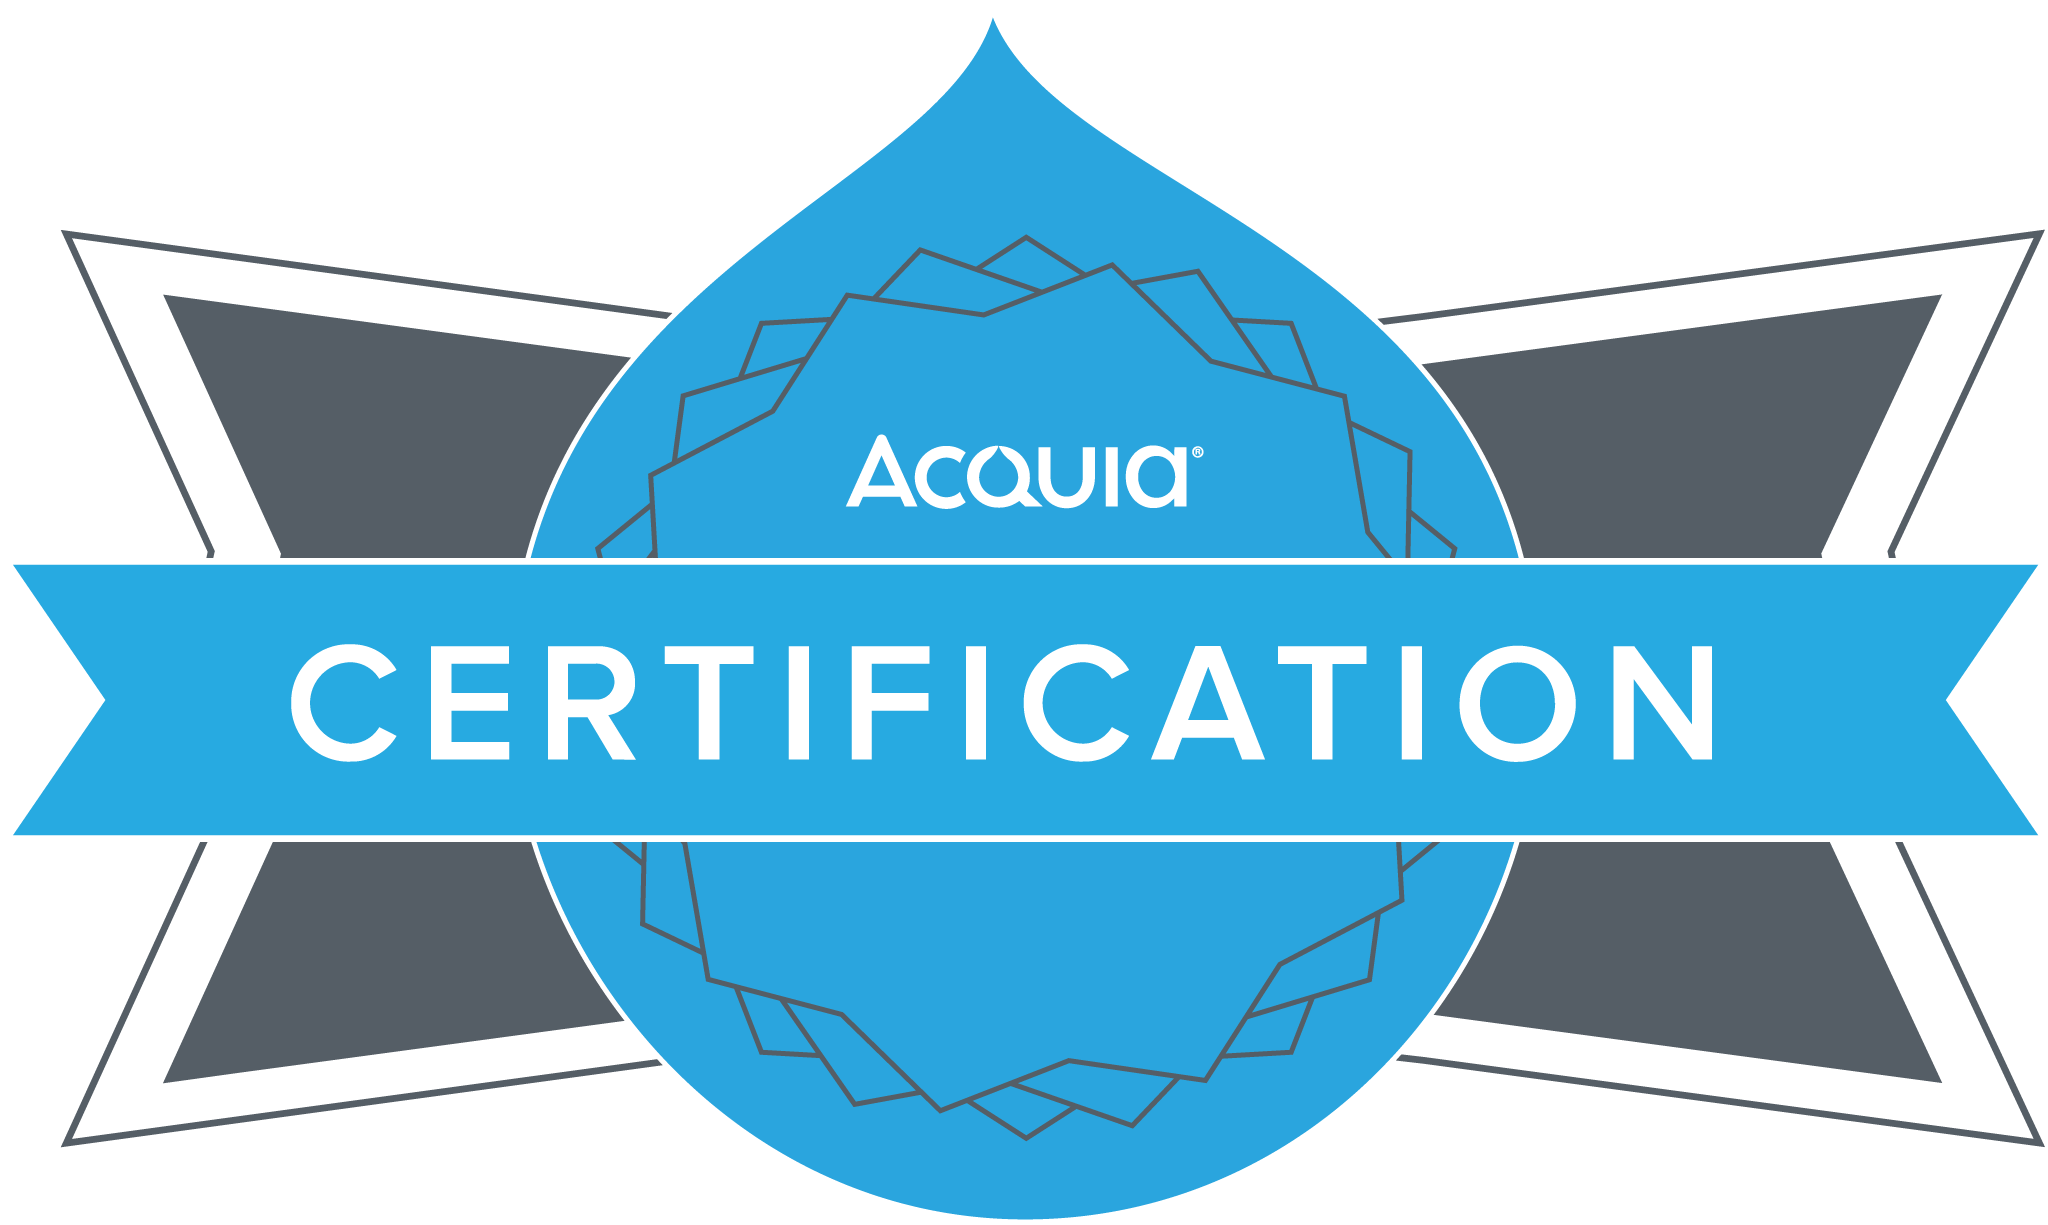 Acquia certification